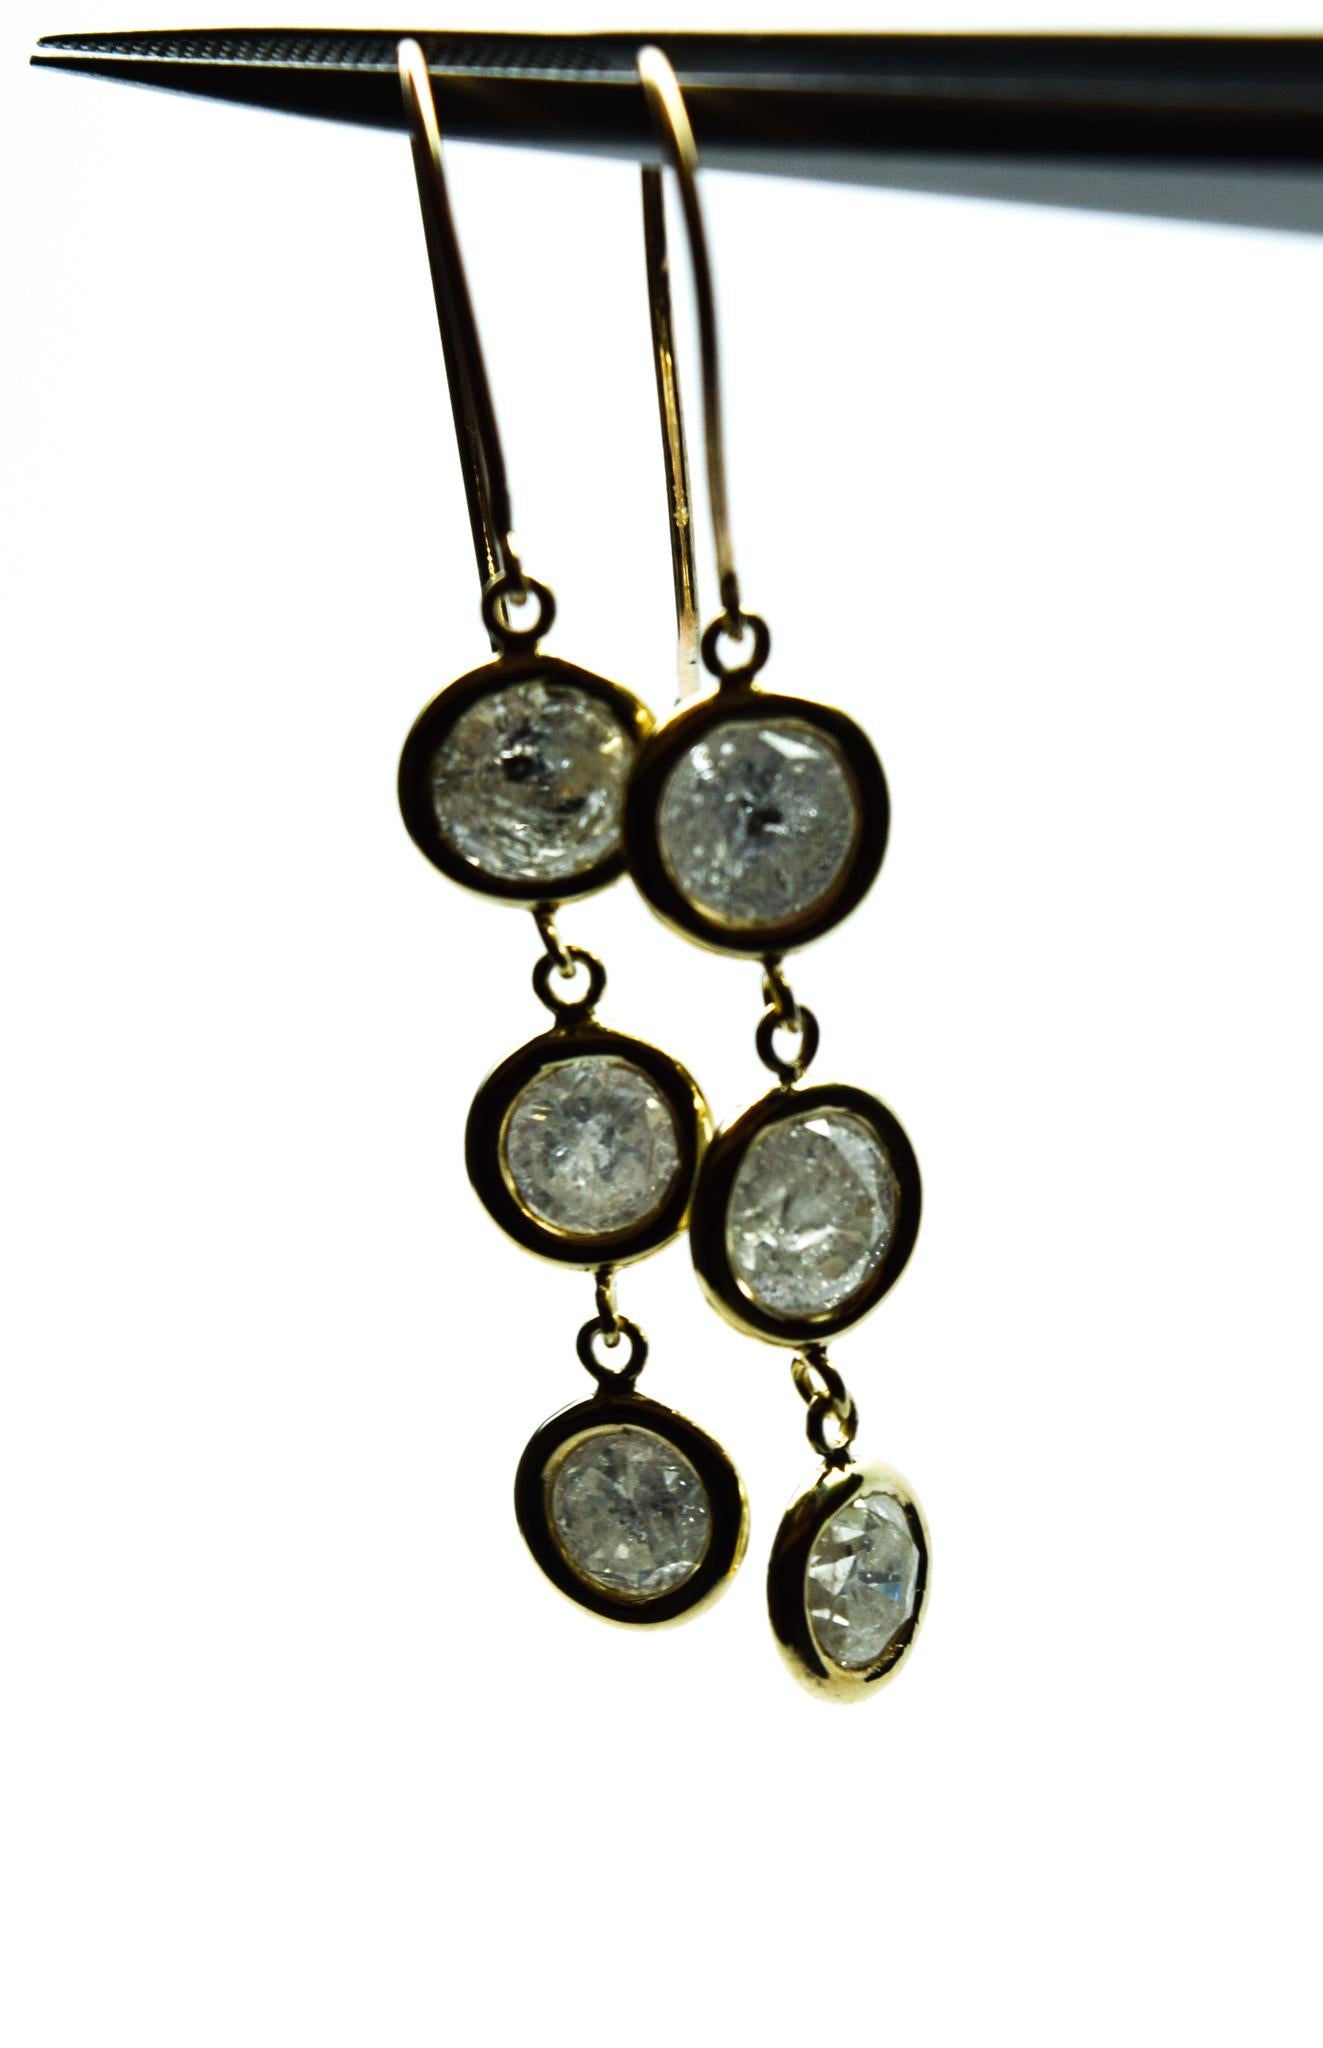 Salt and pepper diamond earrings 4ct diamond earrings dangling 14KT gold In New Condition For Sale In Boca Raton, FL